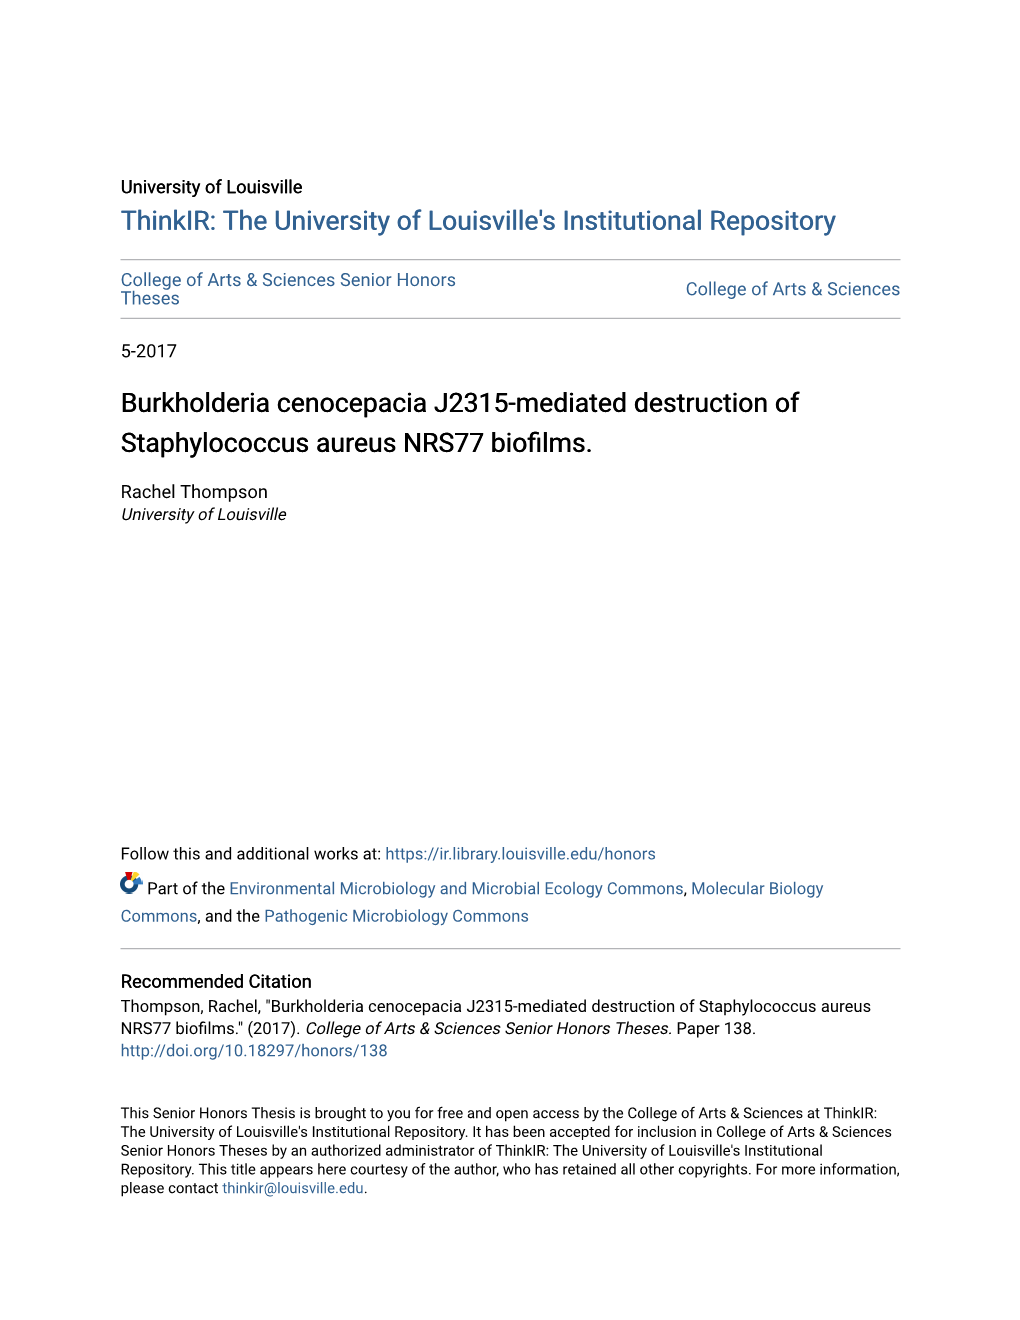 Burkholderia Cenocepacia J2315-Mediated Destruction of Staphylococcus Aureus NRS77 Biofilms